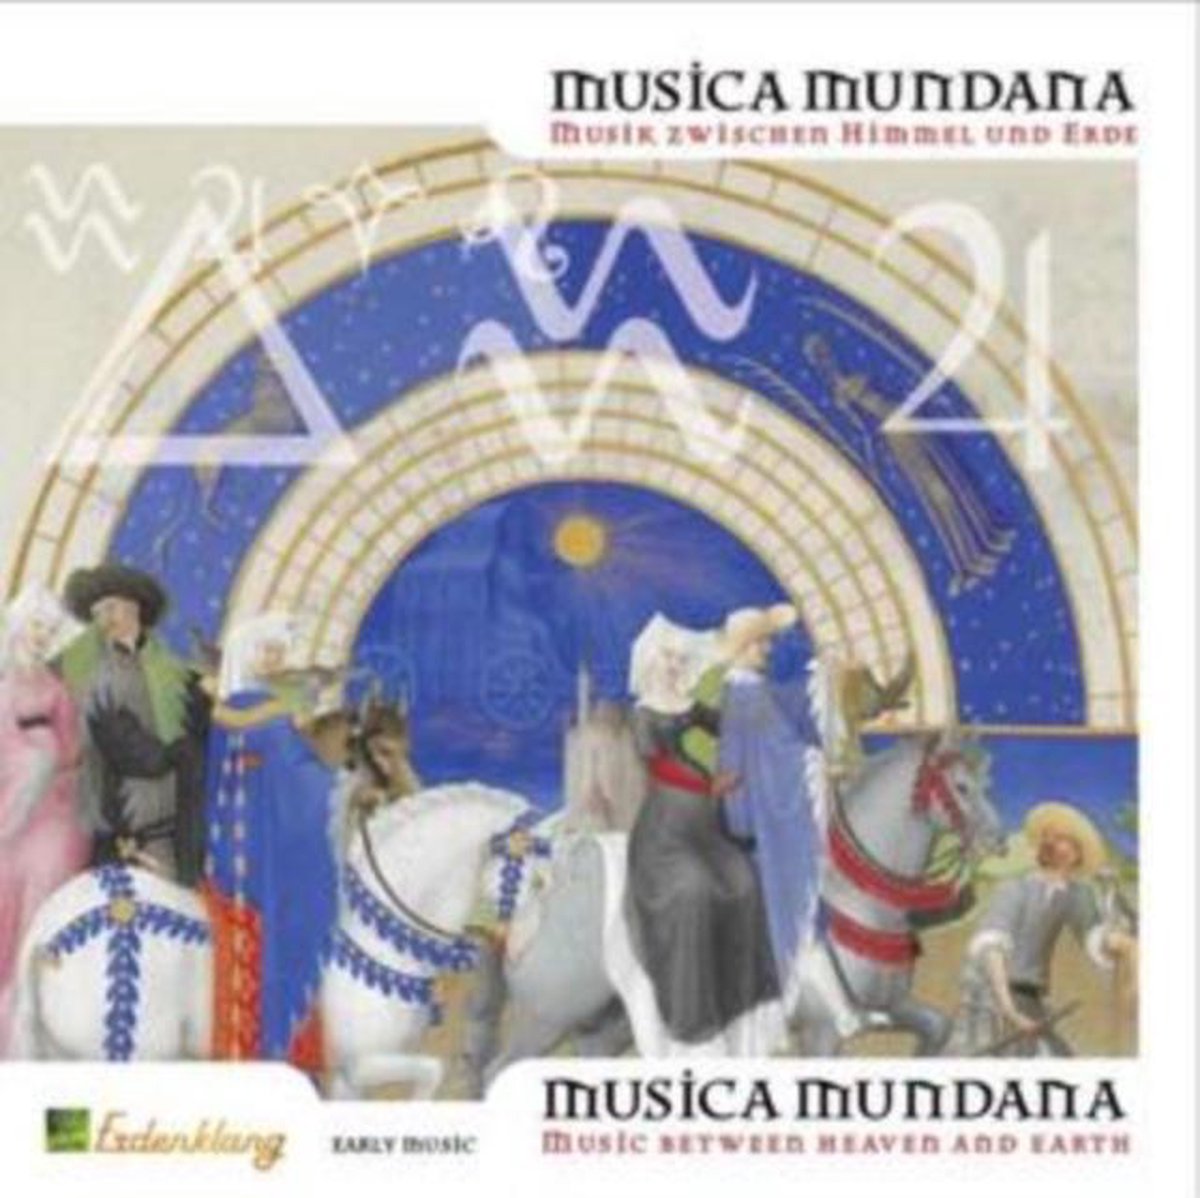 Musica Mundana - various artists